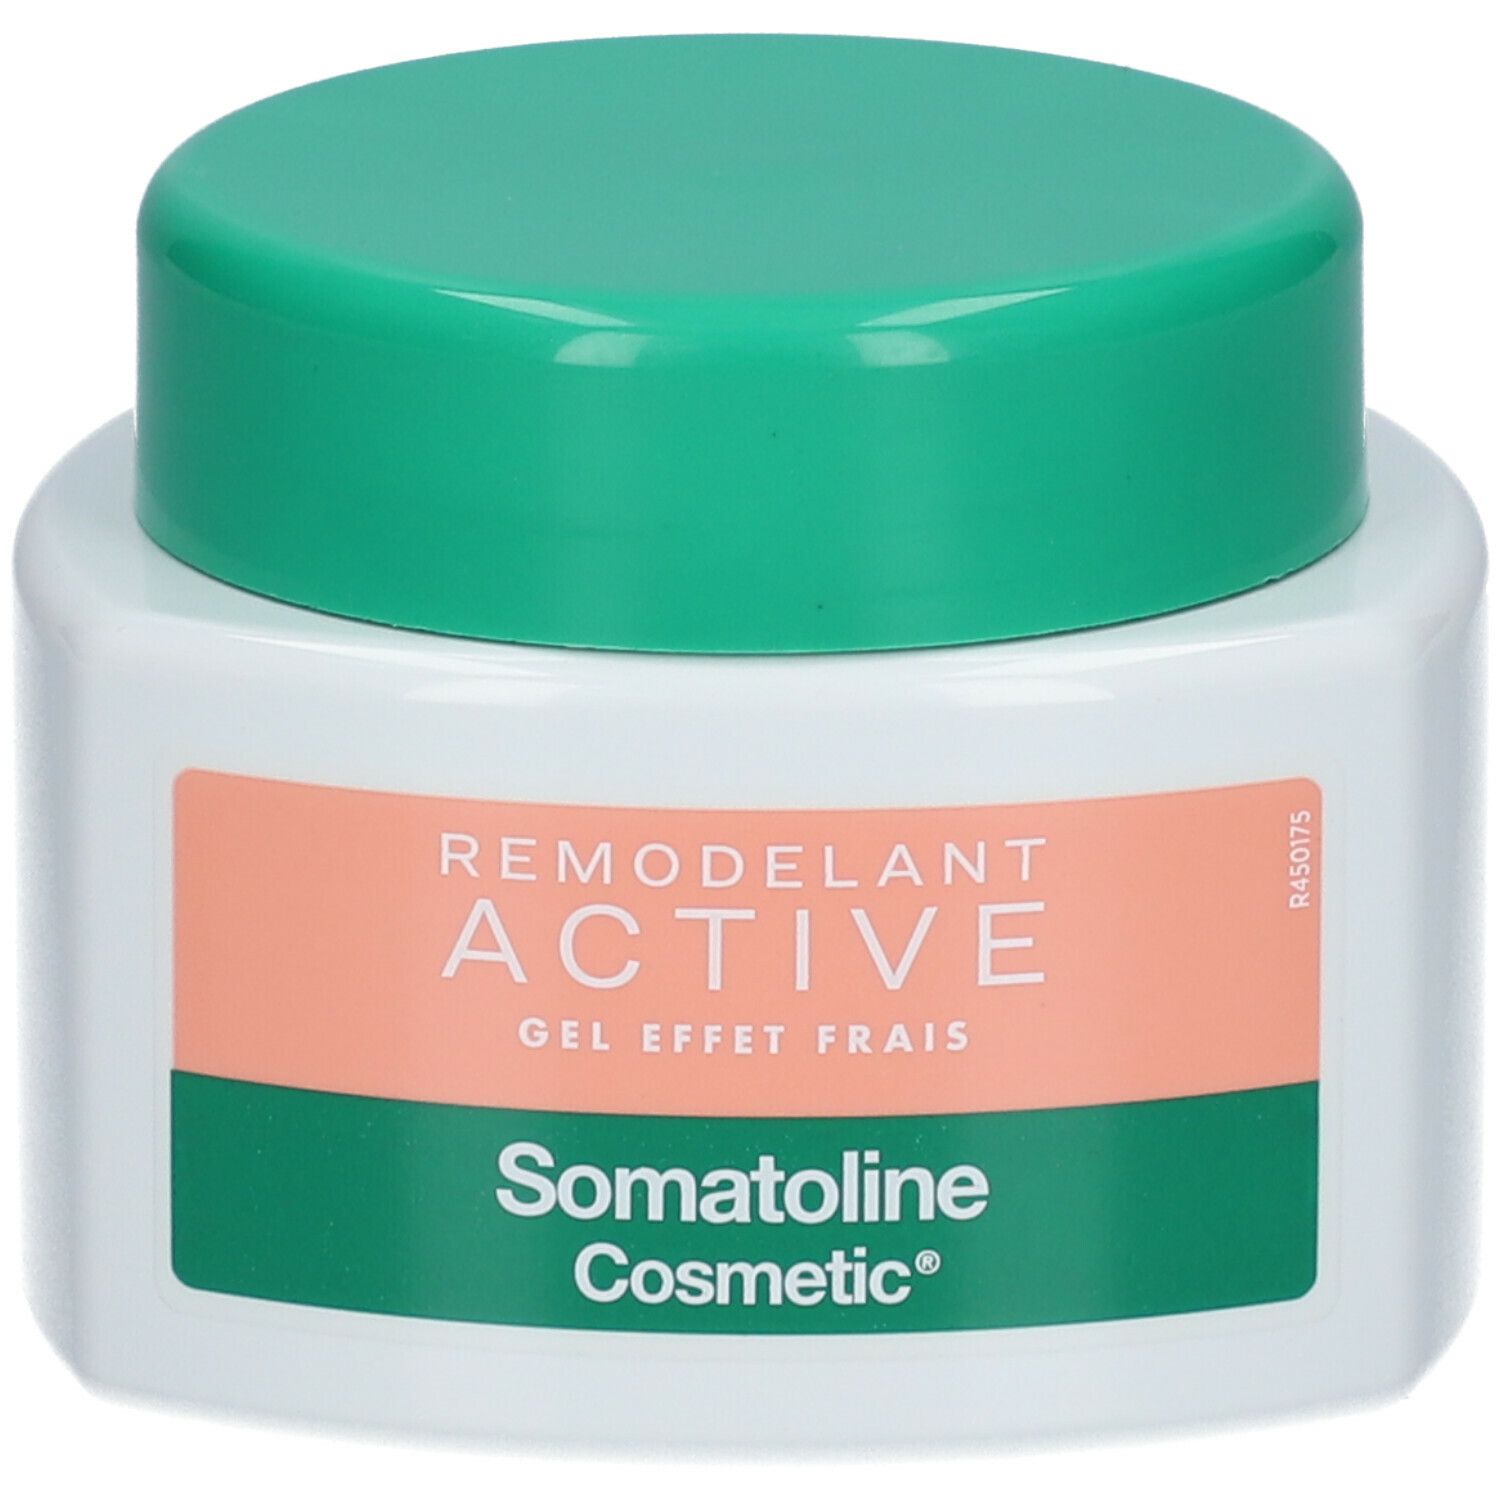 Somatoline Cosmetic® REMODELANT ACTIVE Gel Frais Remodelant Active